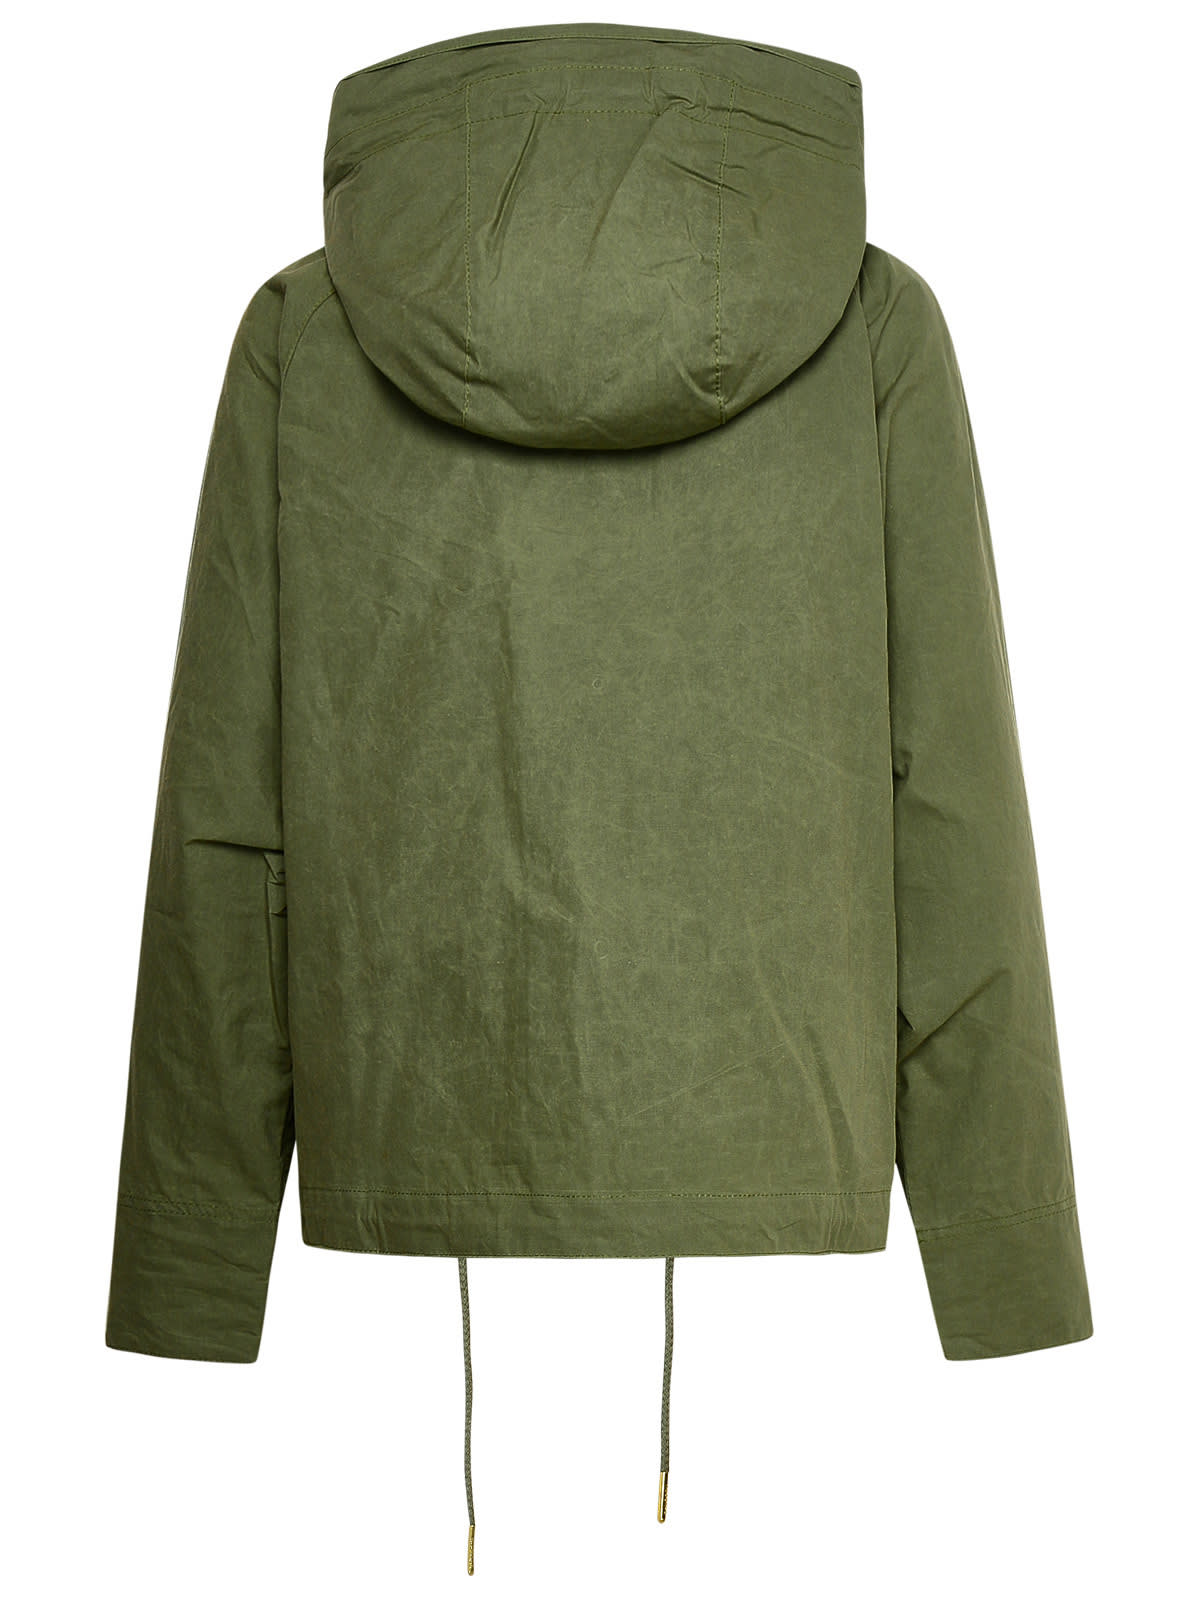 Shop Barbour Green Cotton Jacket In Verde